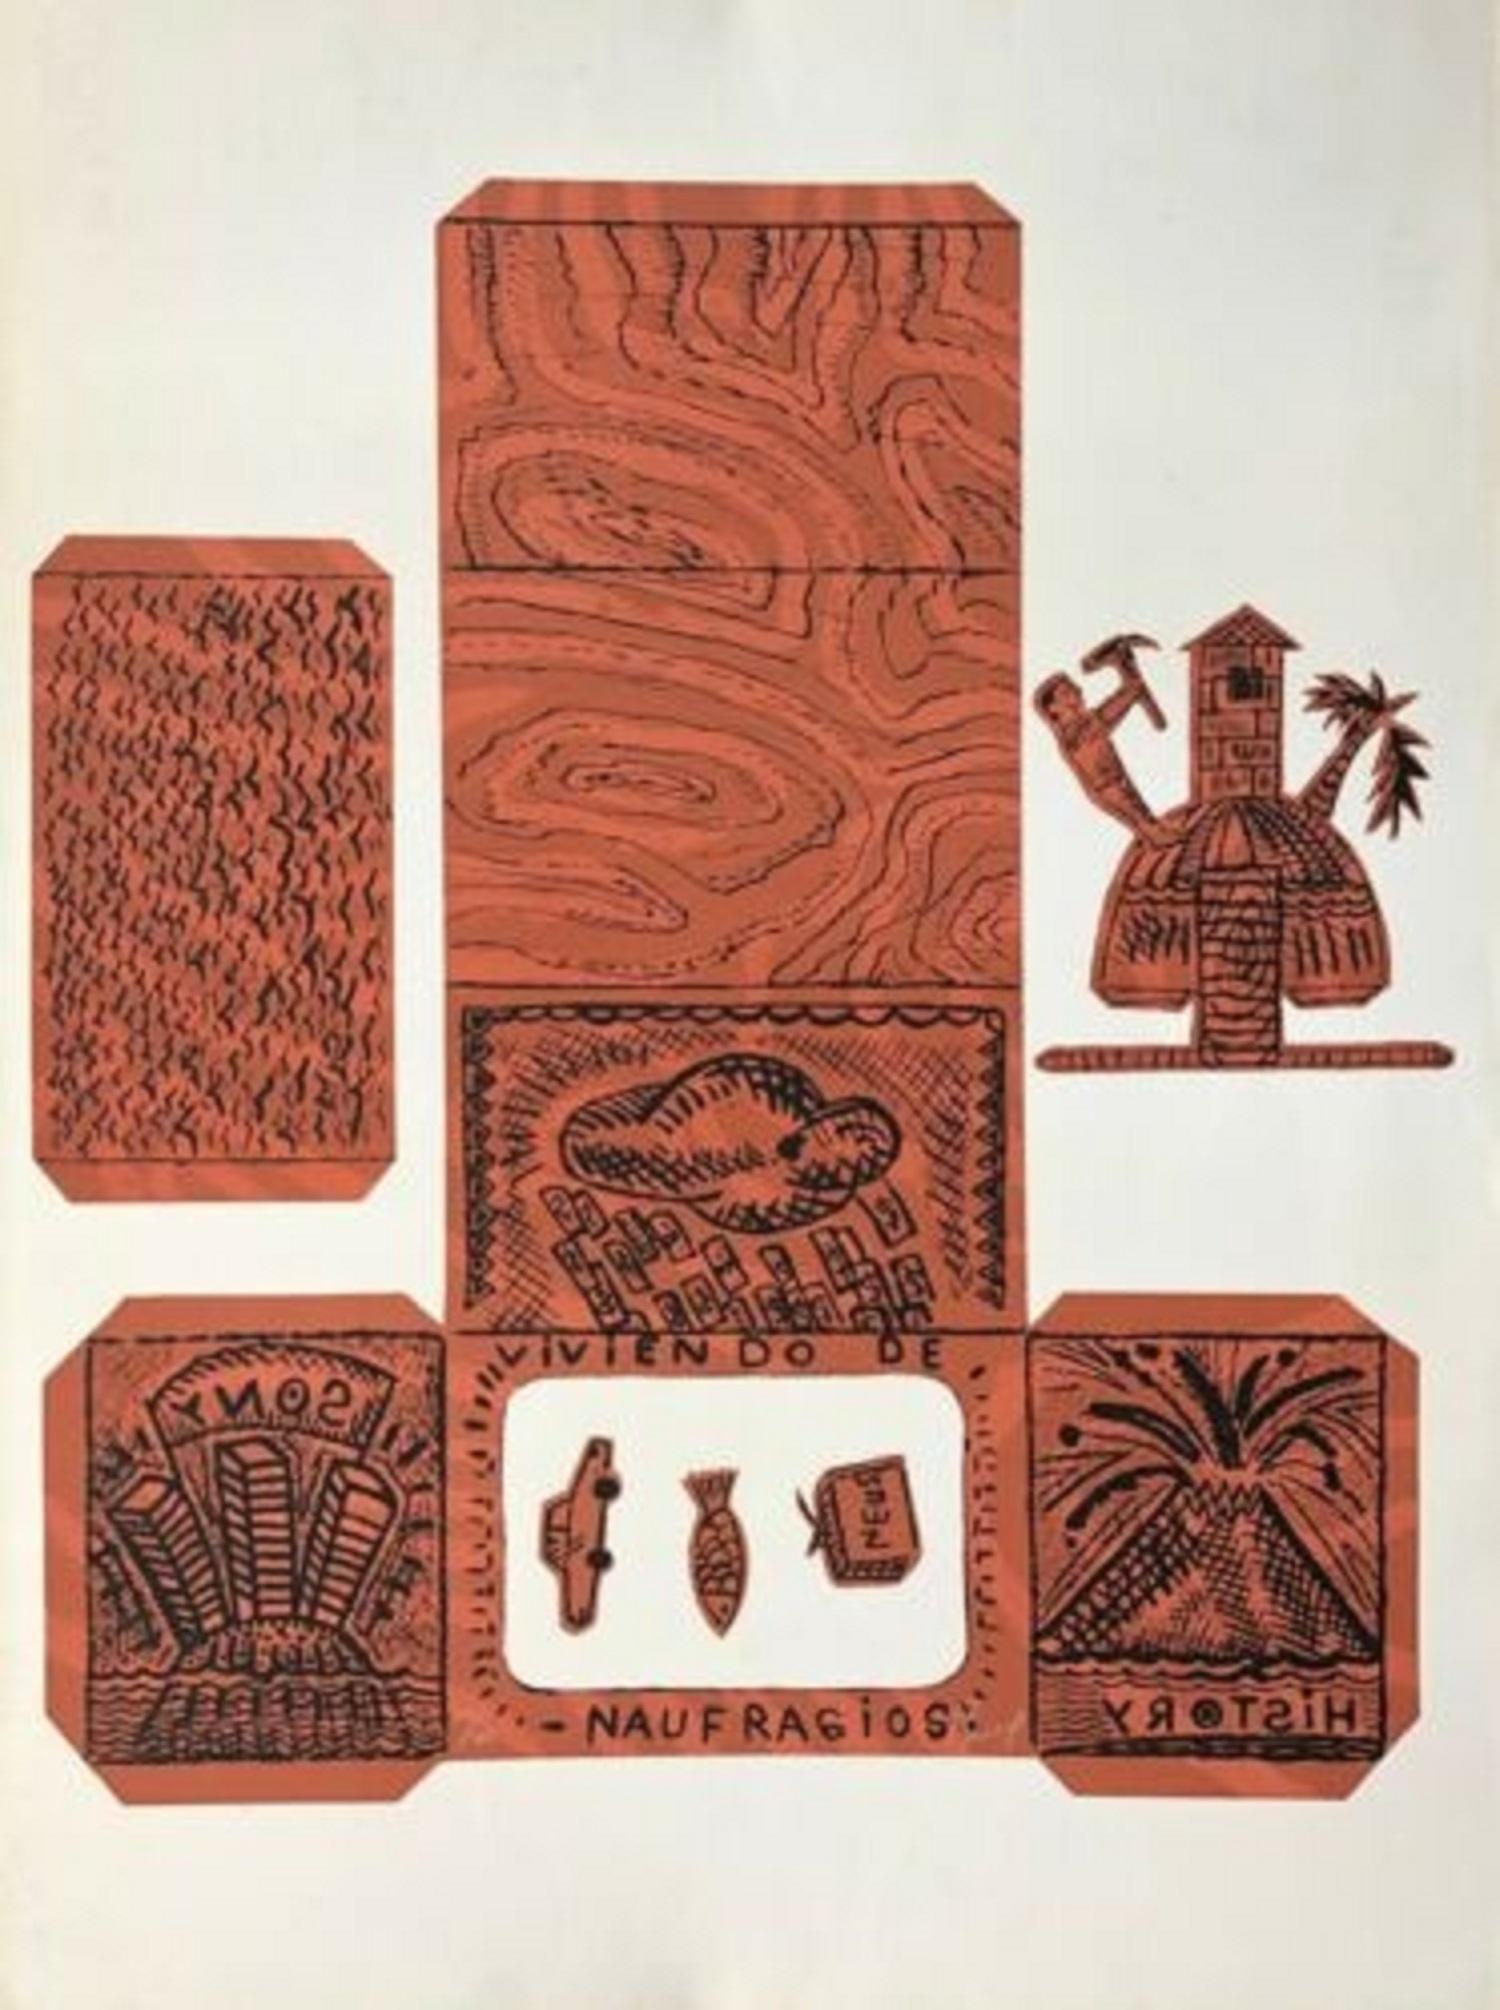 Abel Barroso (Cuba, 1971)
'Naufragios', 
silkscreen on paper Velin Arches 300 g.
30 x 19.7 in. (76 x 50 cm.)
Edition of 40
ID: BAO-301
Unframed